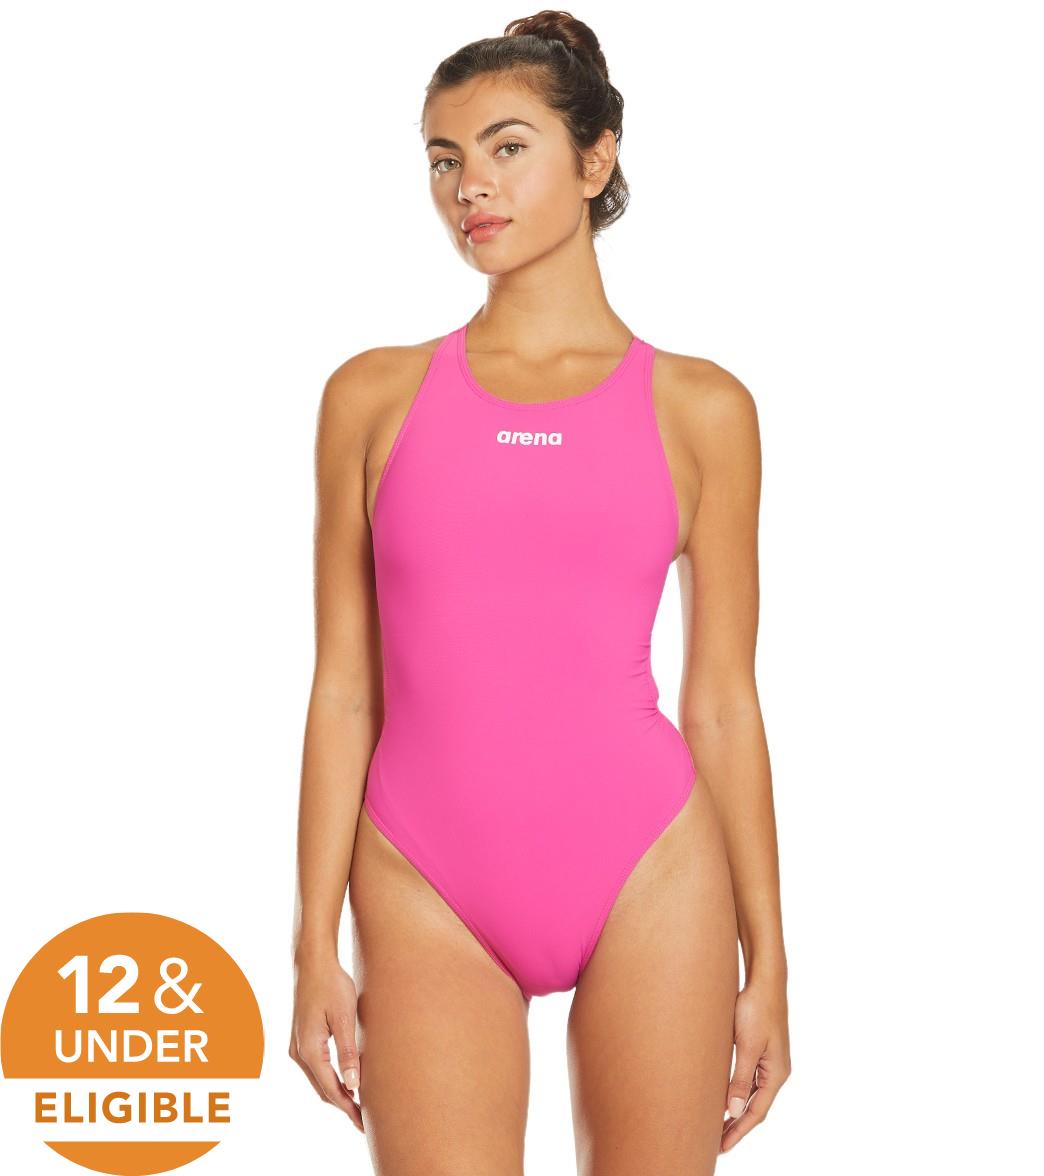 Arena Women's Powerskin St Classic Tech Suit Swimsuit - Fuchsia 26 Elastane/Nylon - Swimoutlet.com